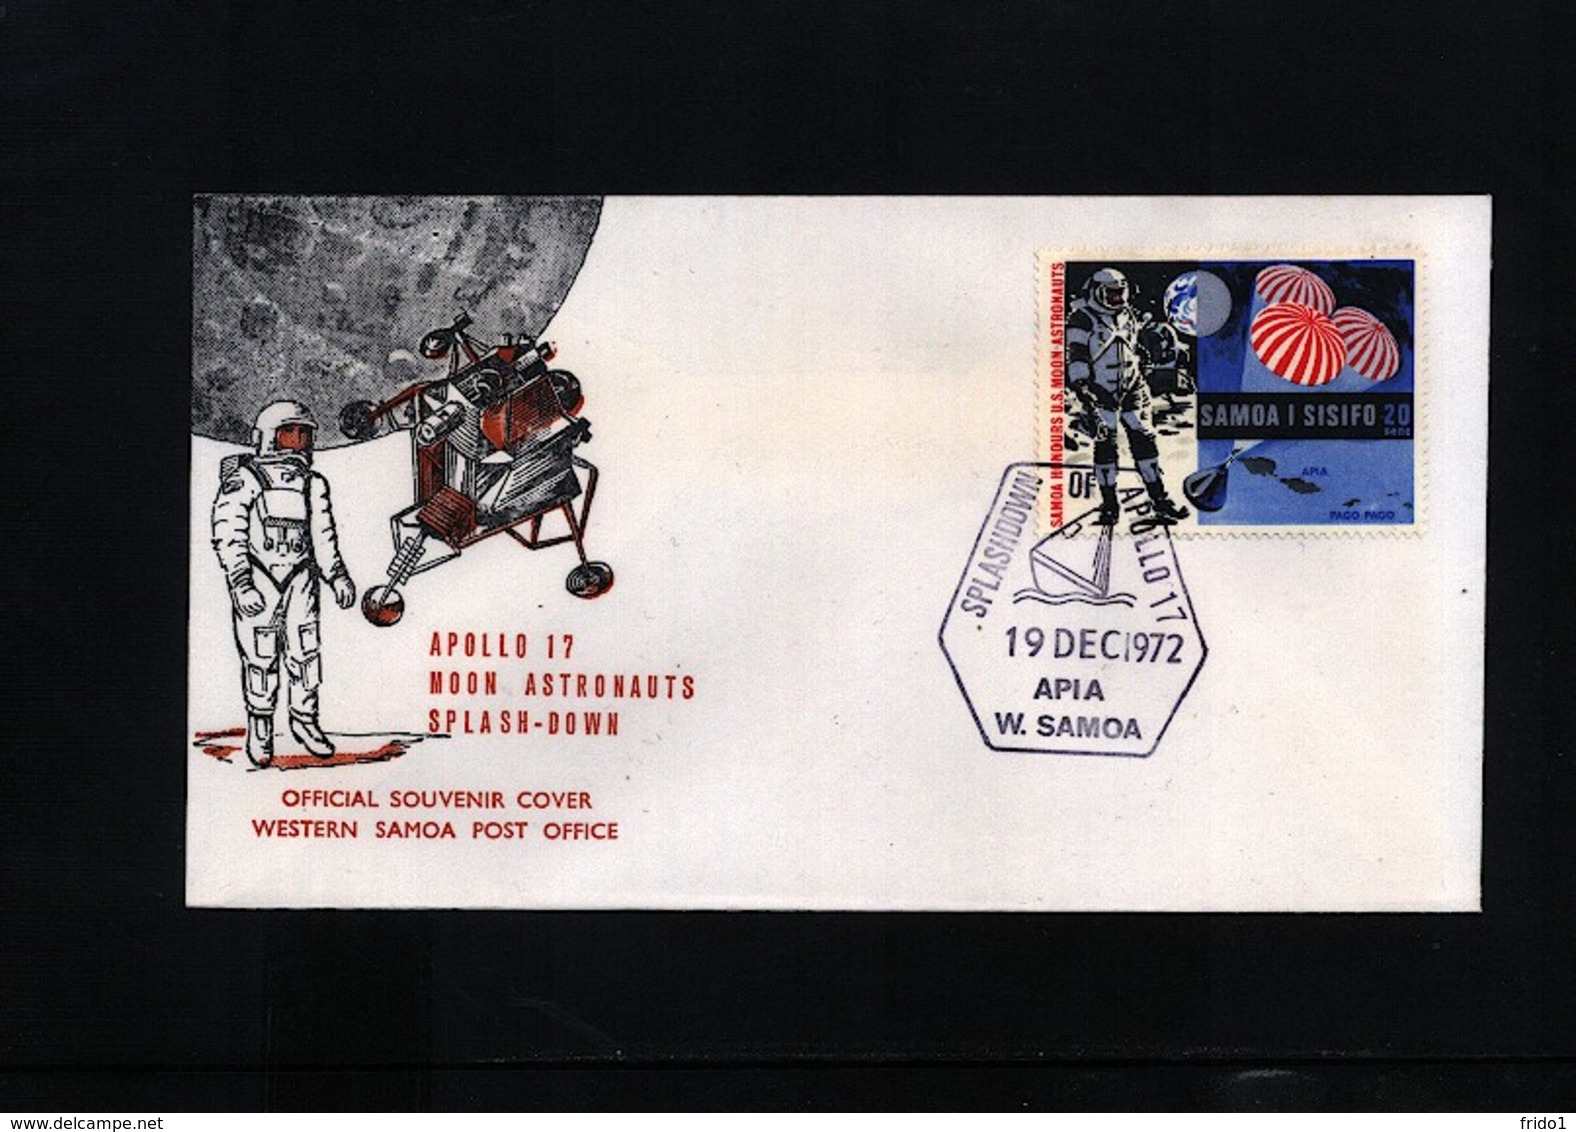 Samoa And Sisifo 1972 Moon Astronauts Interesting Cover - Océanie